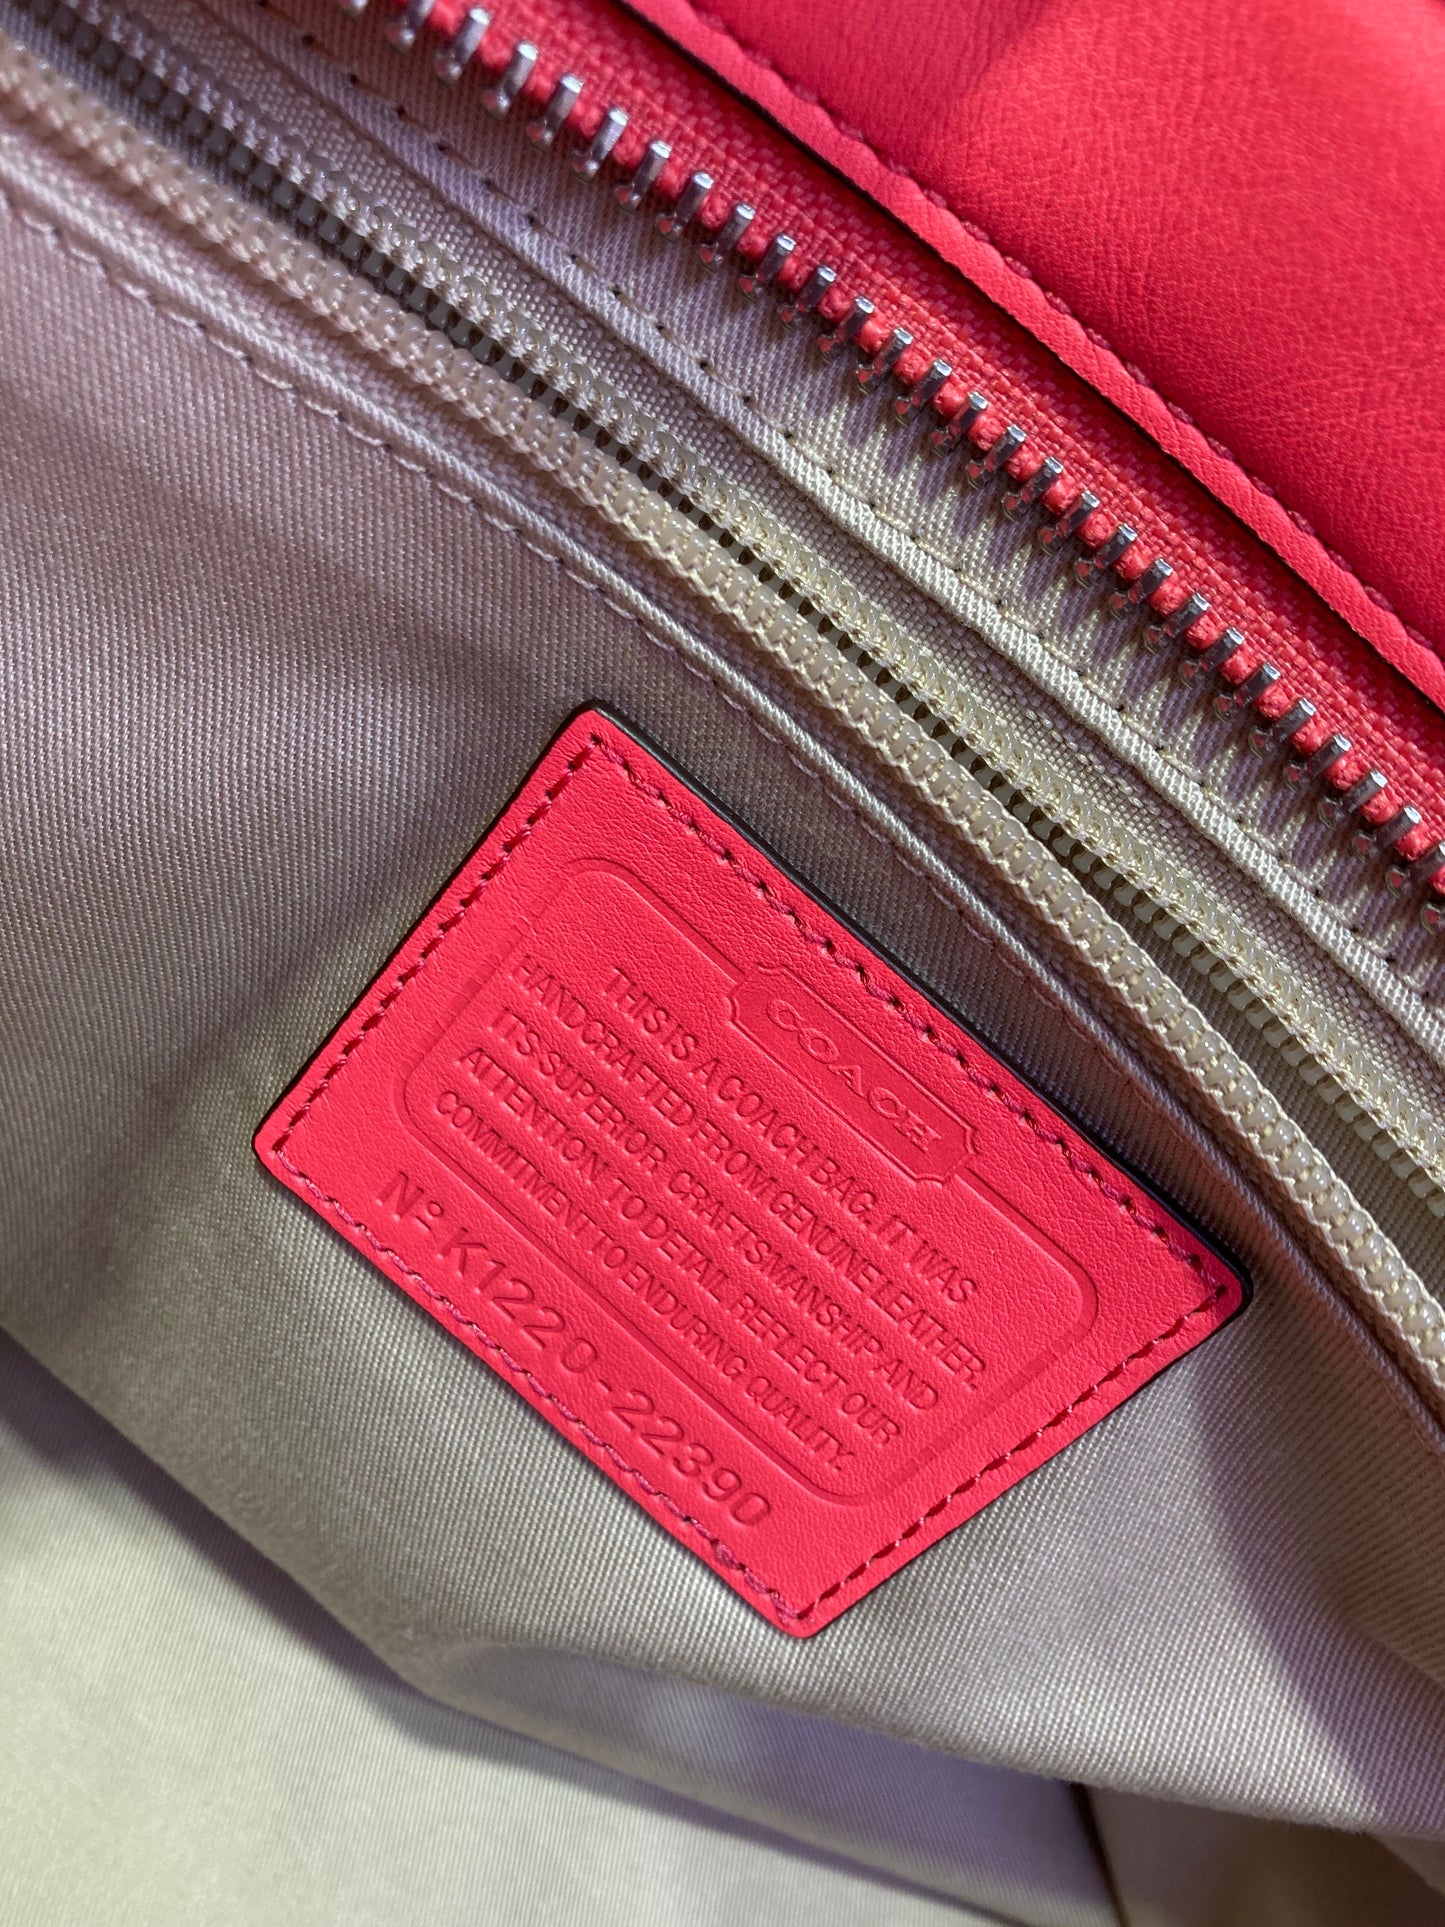 Coach Designer Handbag leather salmon color.